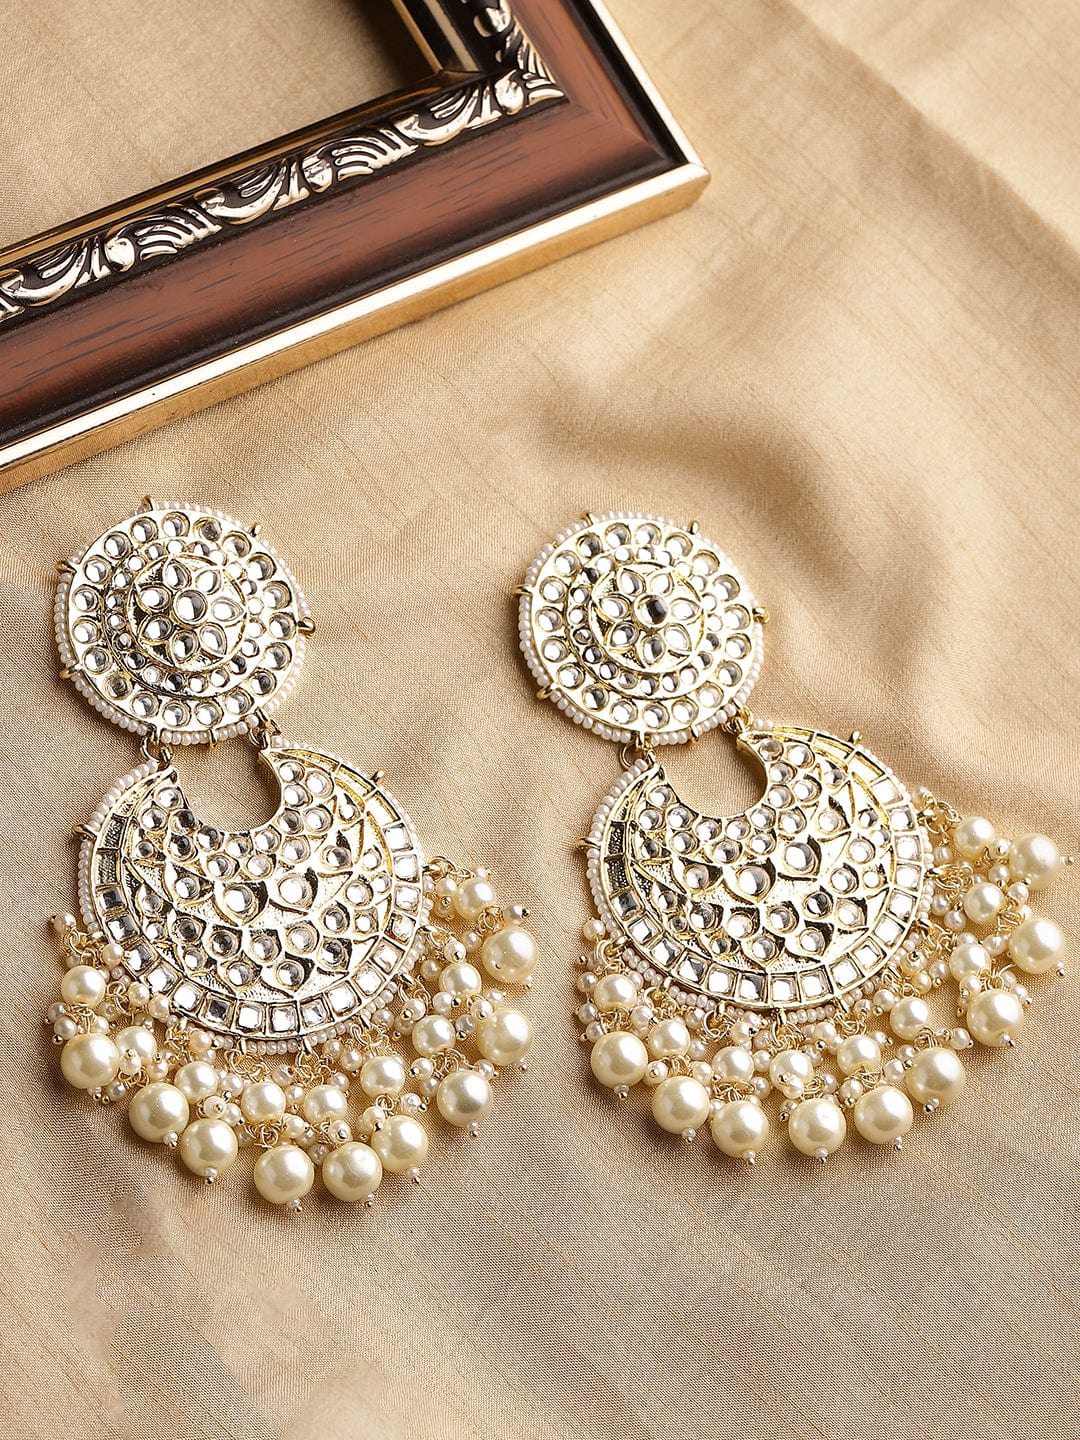 Earrings : Alloy gold plated kundan pearl jhumka earrings